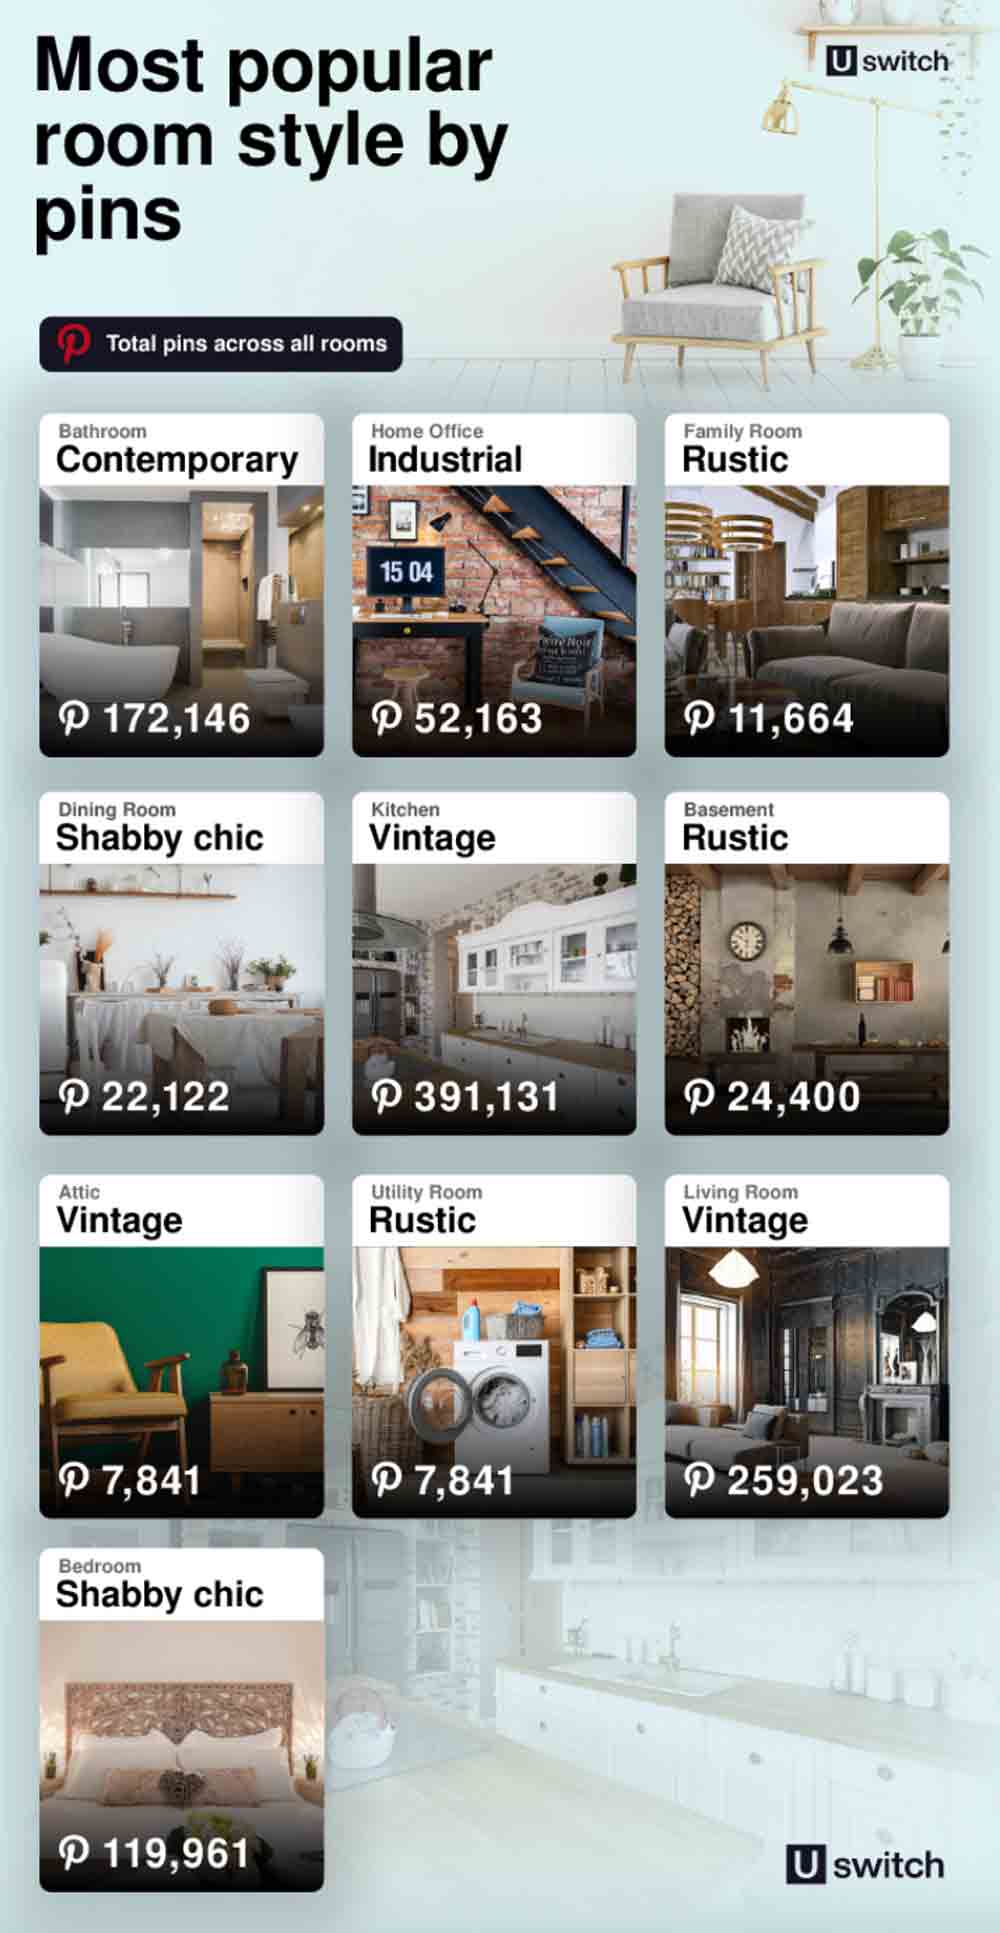 Home Decor 2022: Top 10 interior design styles to follow according to Pinterest